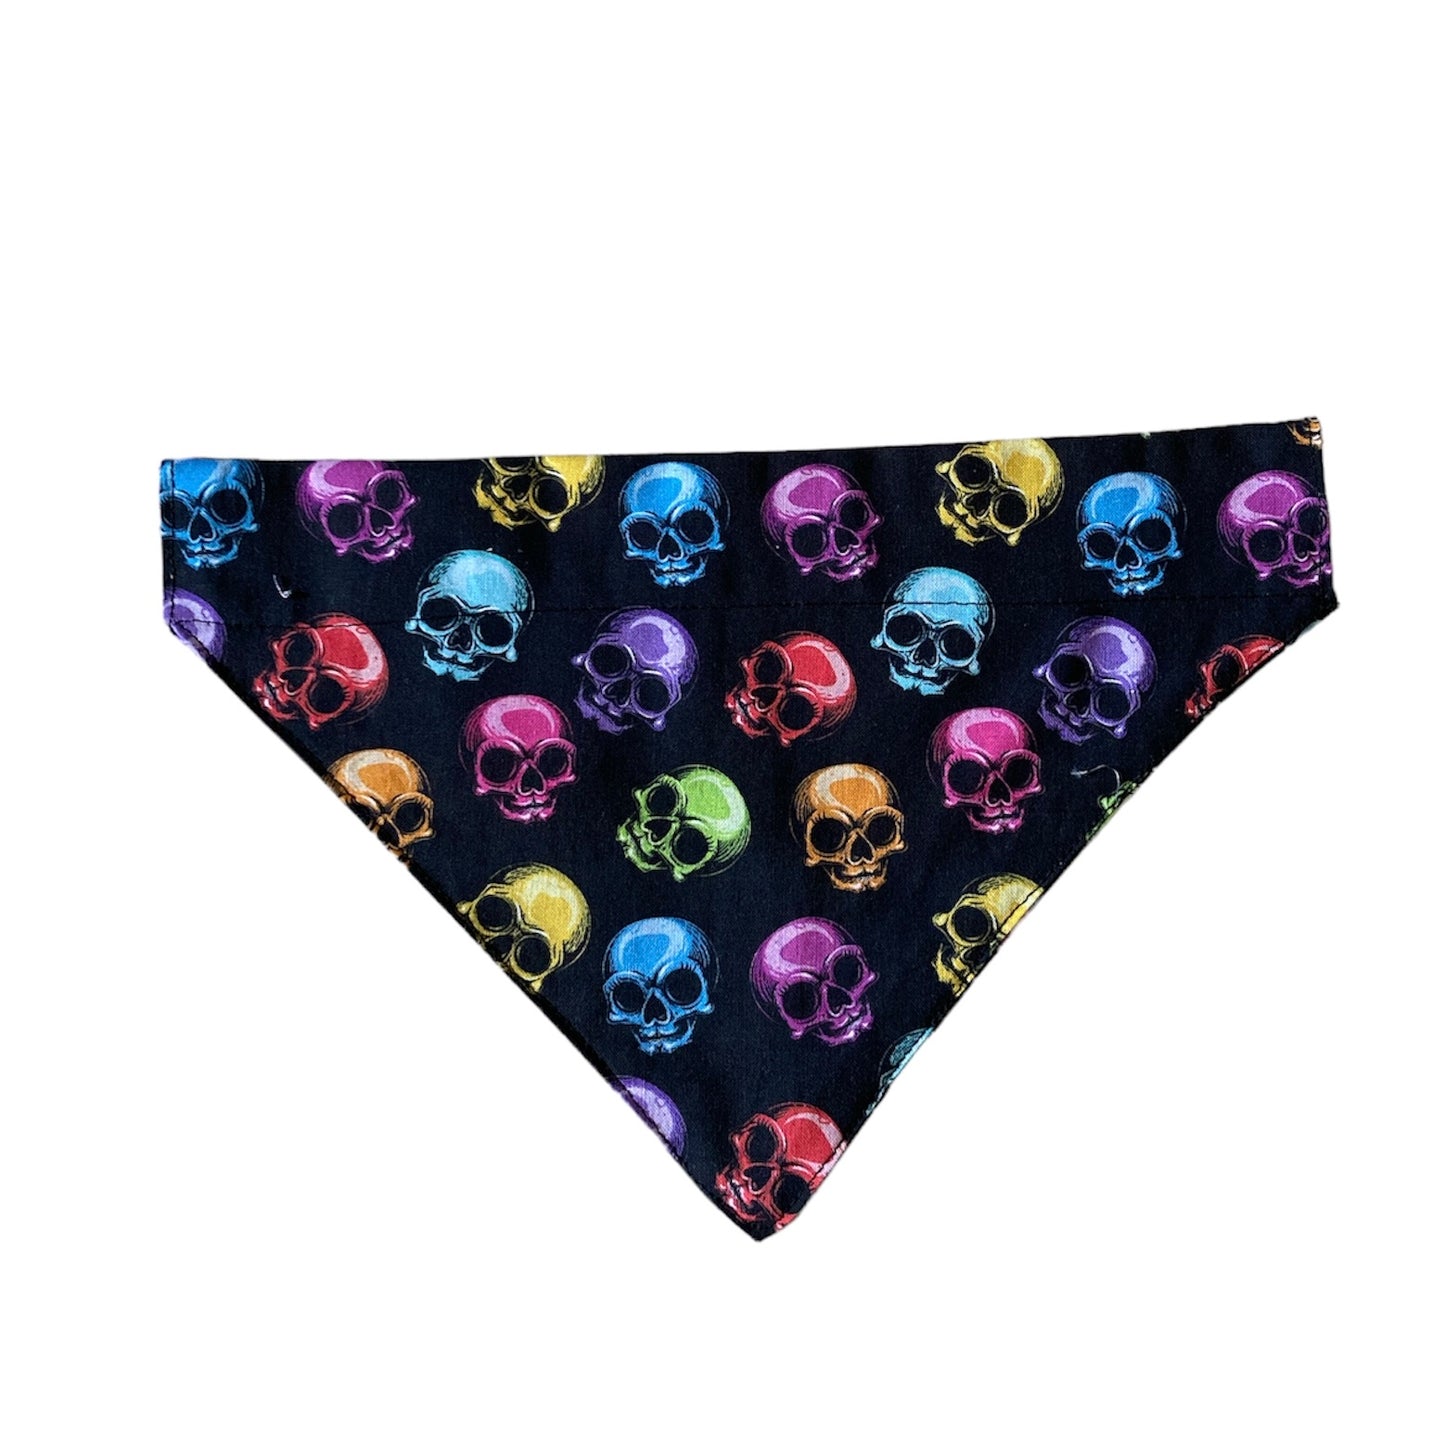 Rainbow skull dog bandana